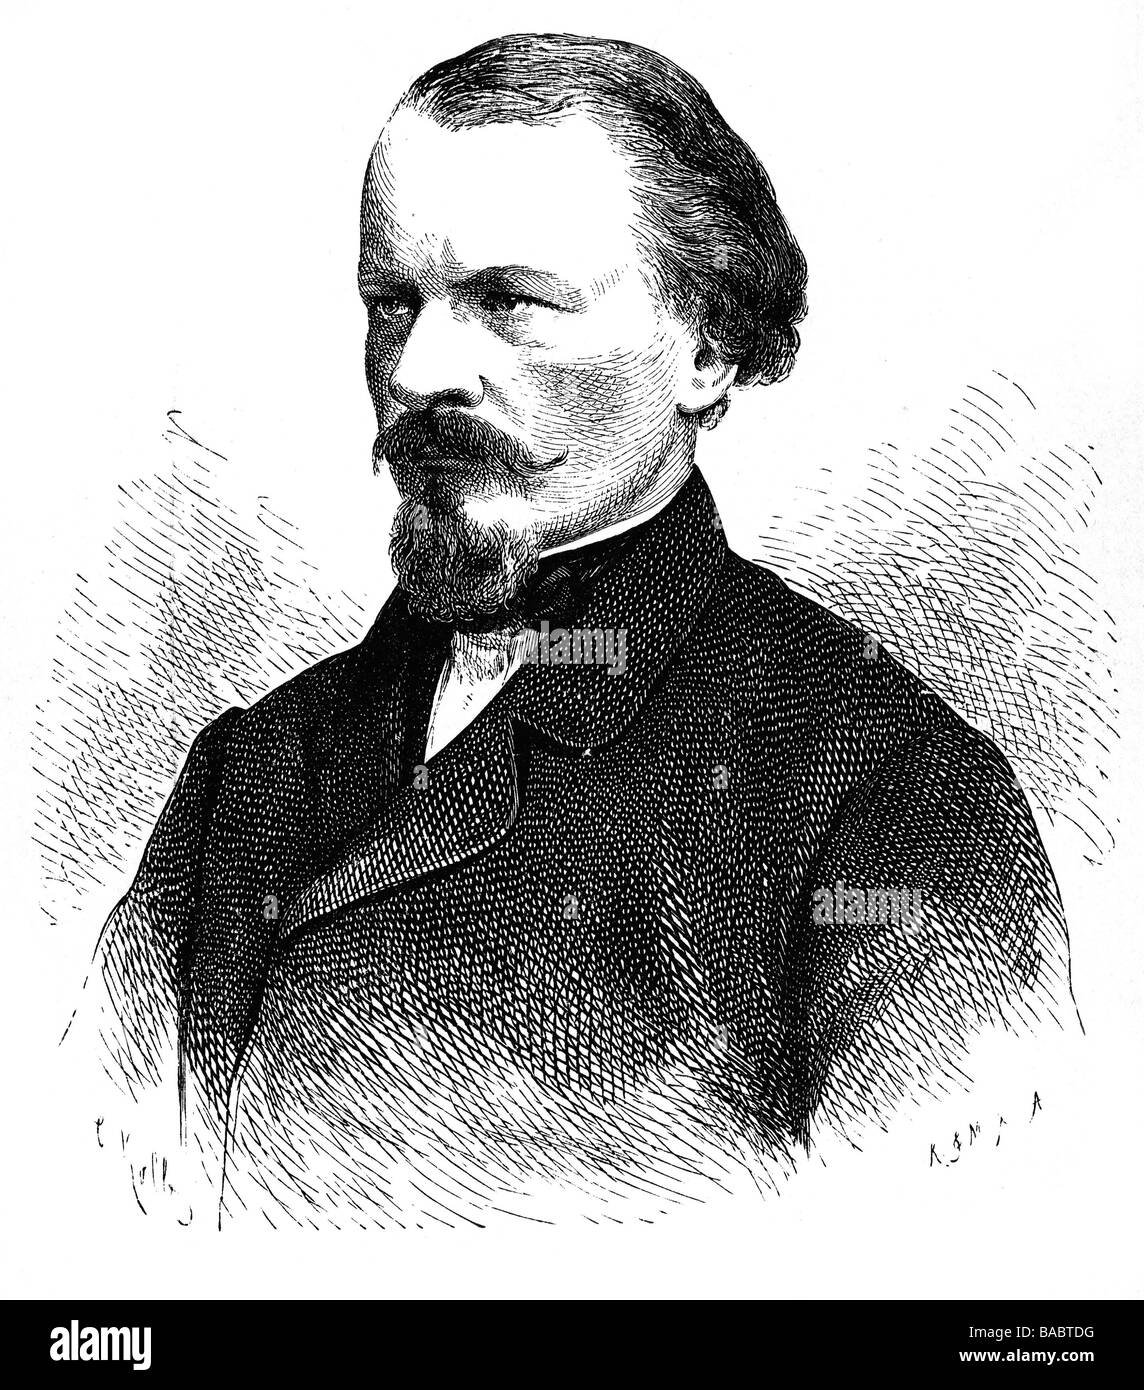 Freytag, Gustav, 13.7.1816 - 30.4.1895, German author / writer, portrait, wood engraving, circa 1880, Stock Photo